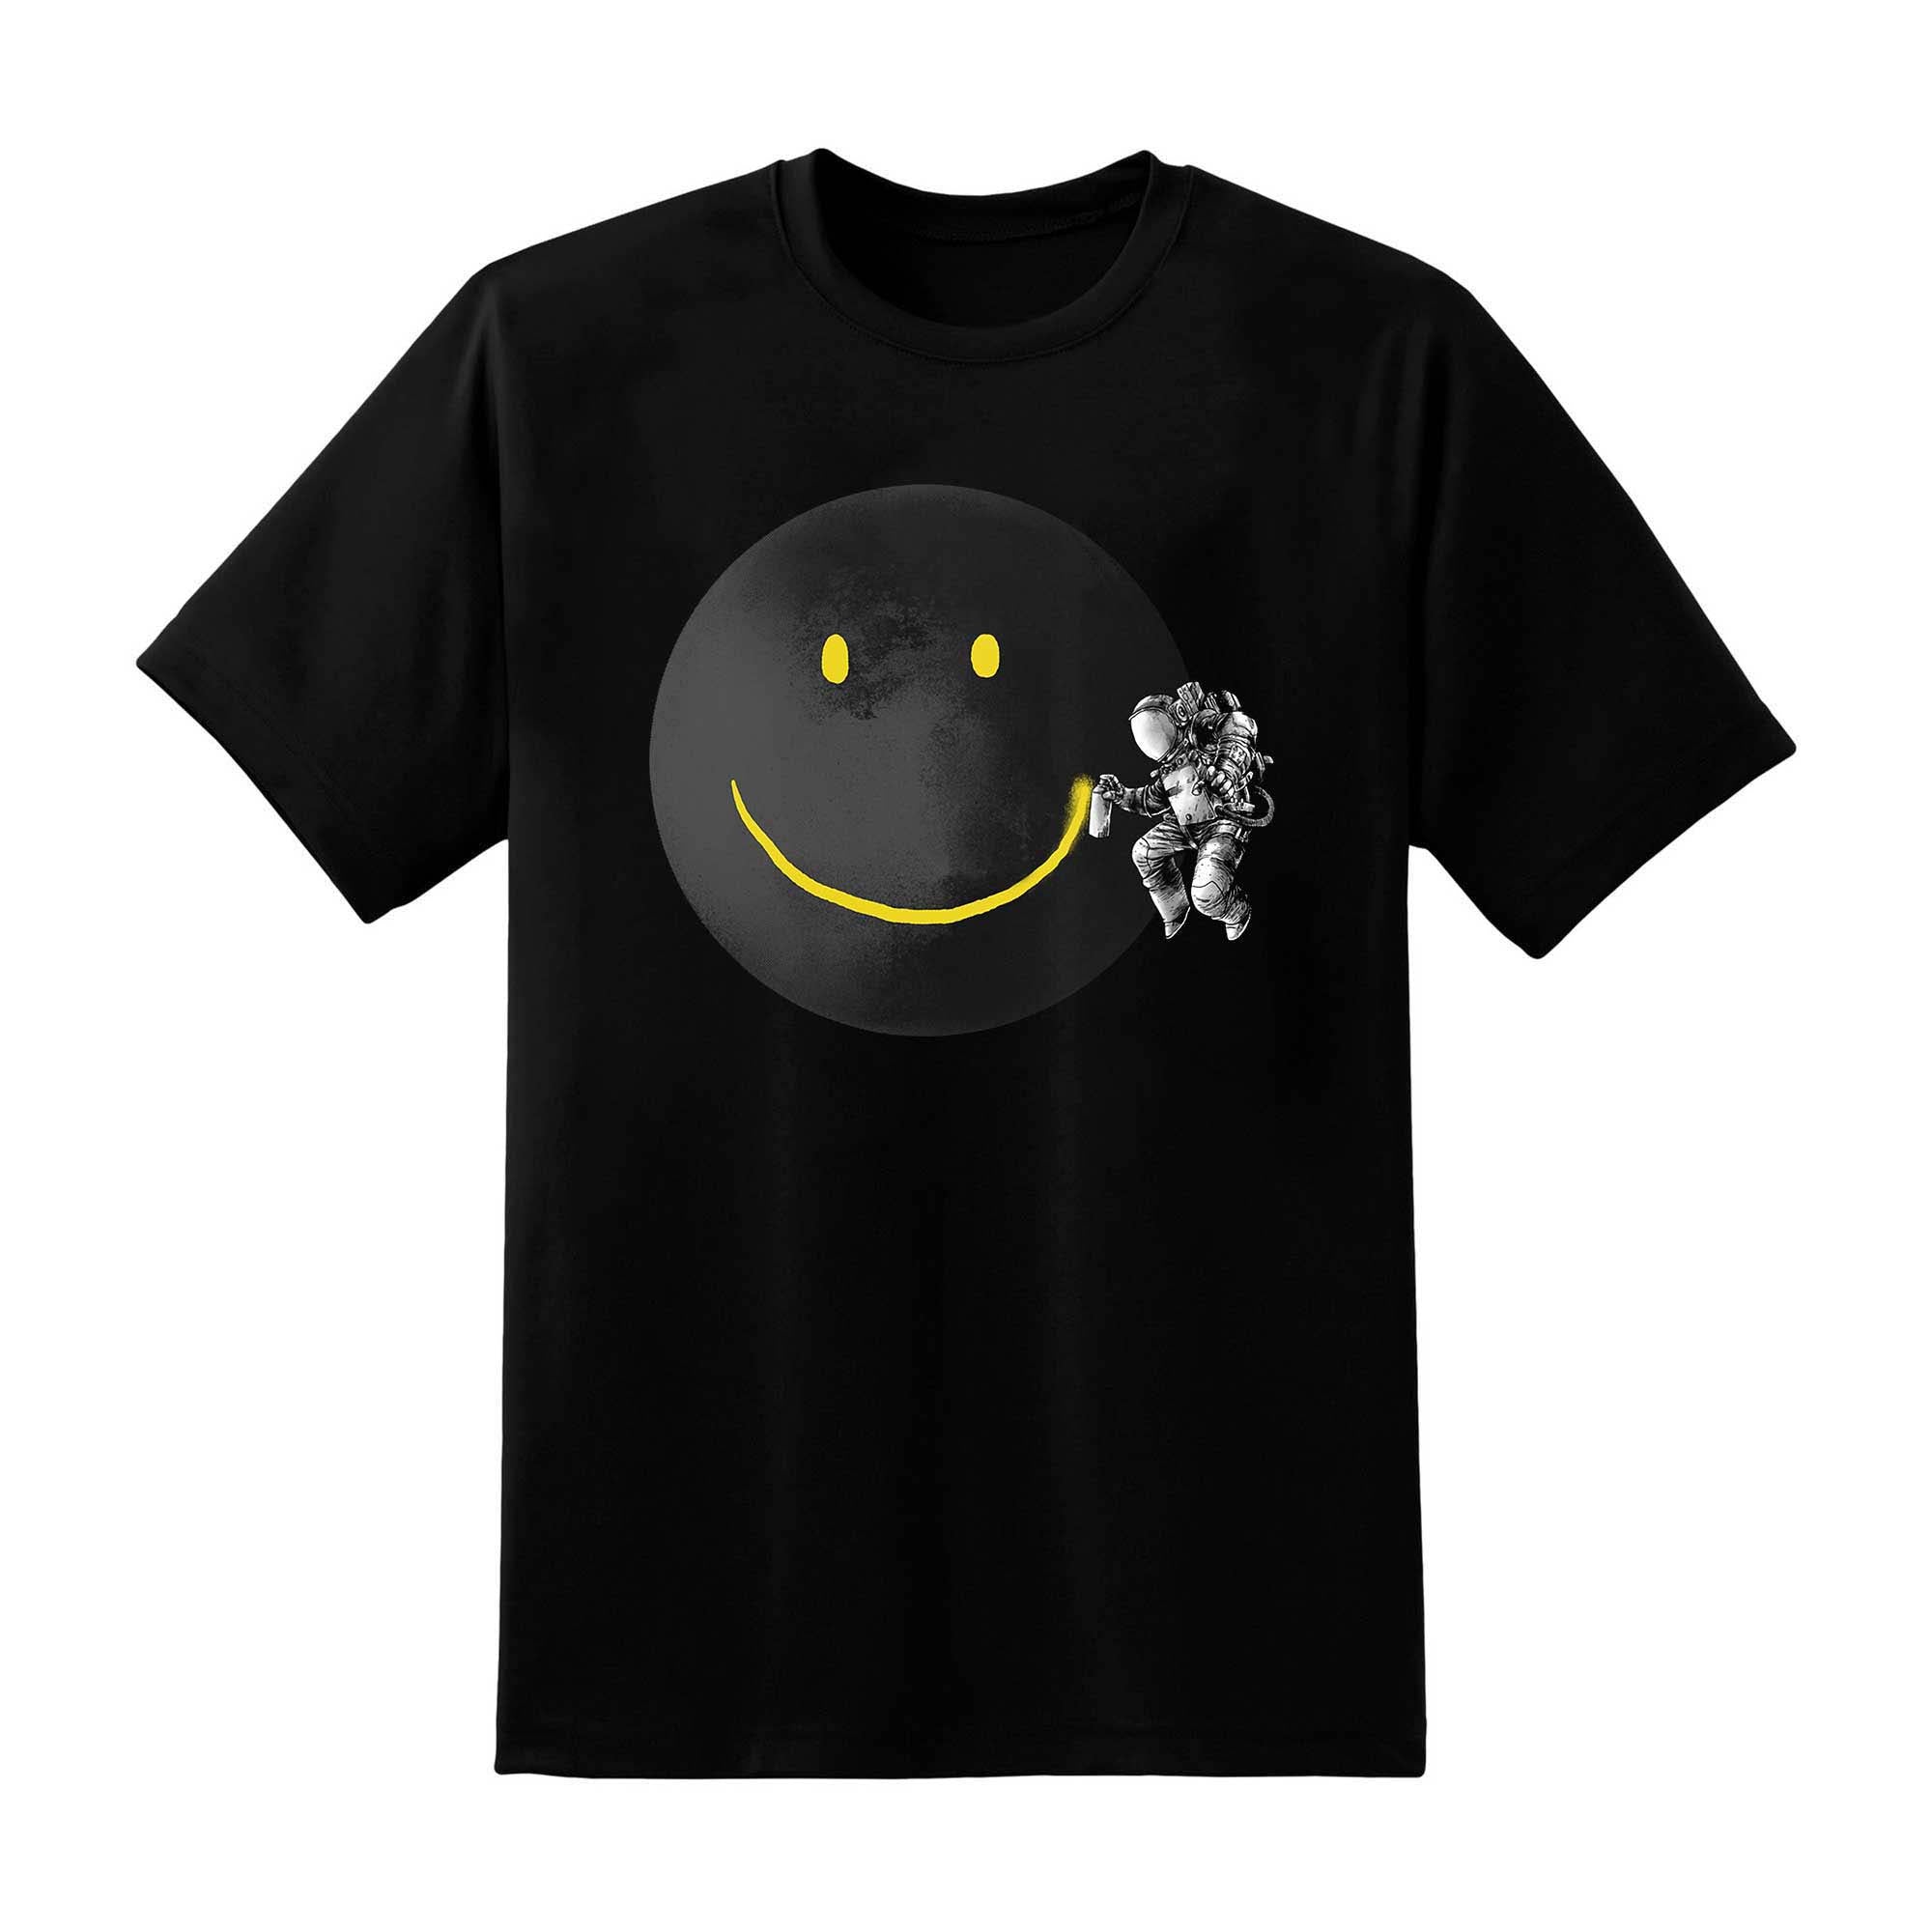 Skitongift Skitongift Make A Smile Classic T Shirt Funny Shirts